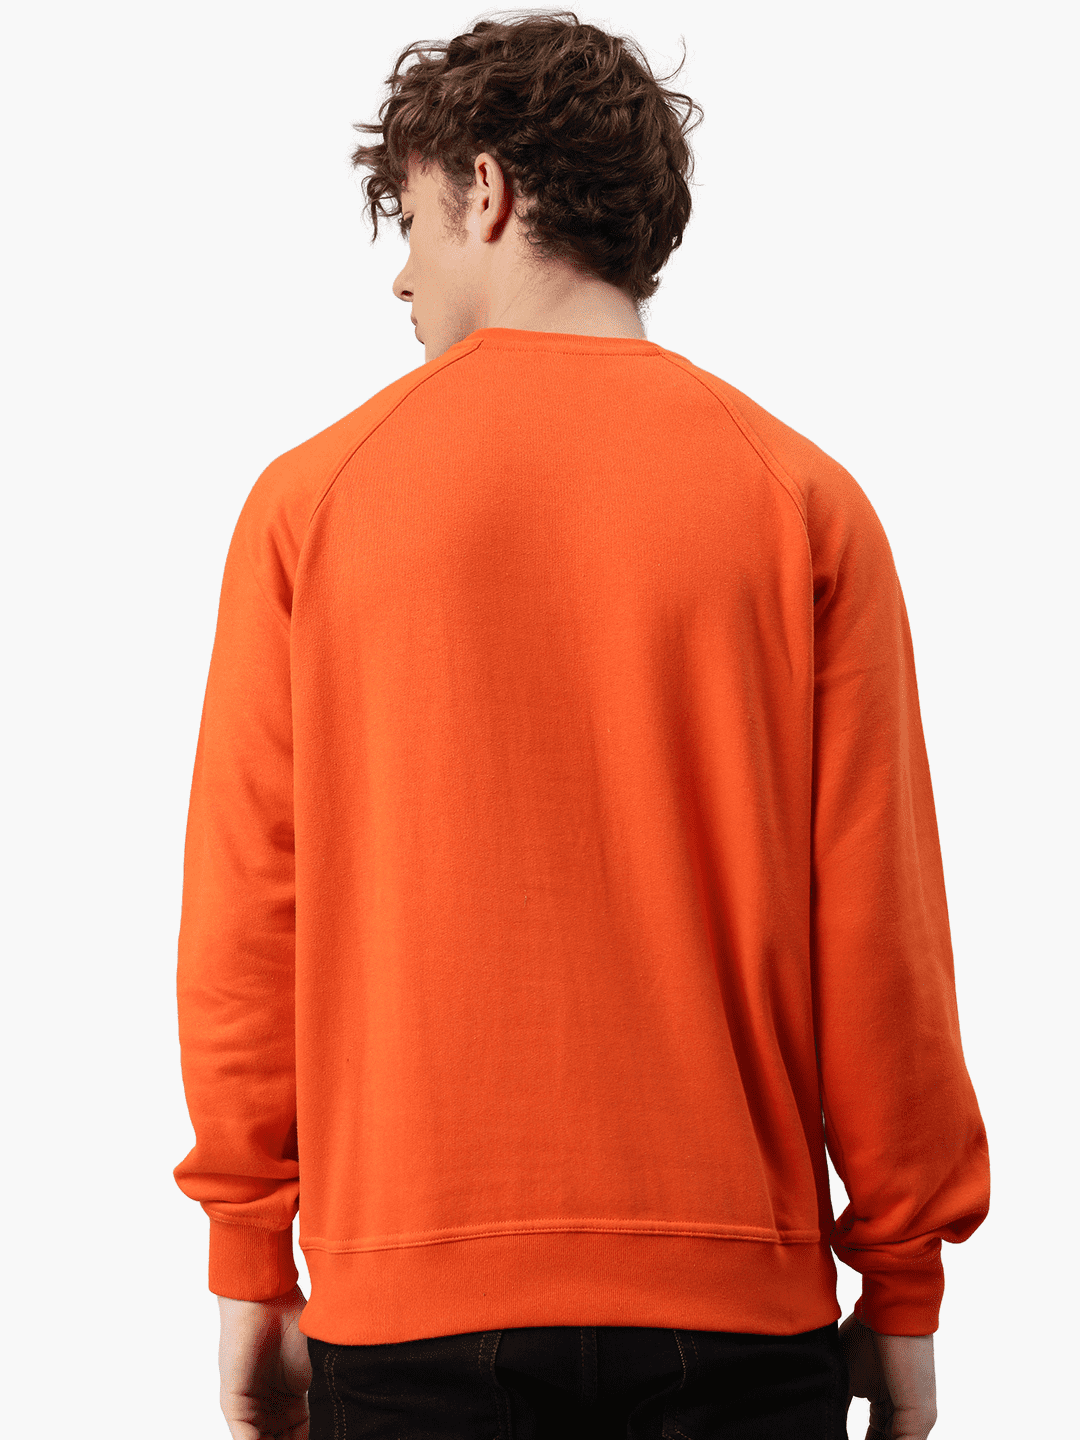 Premium Sweatshirt London 1500